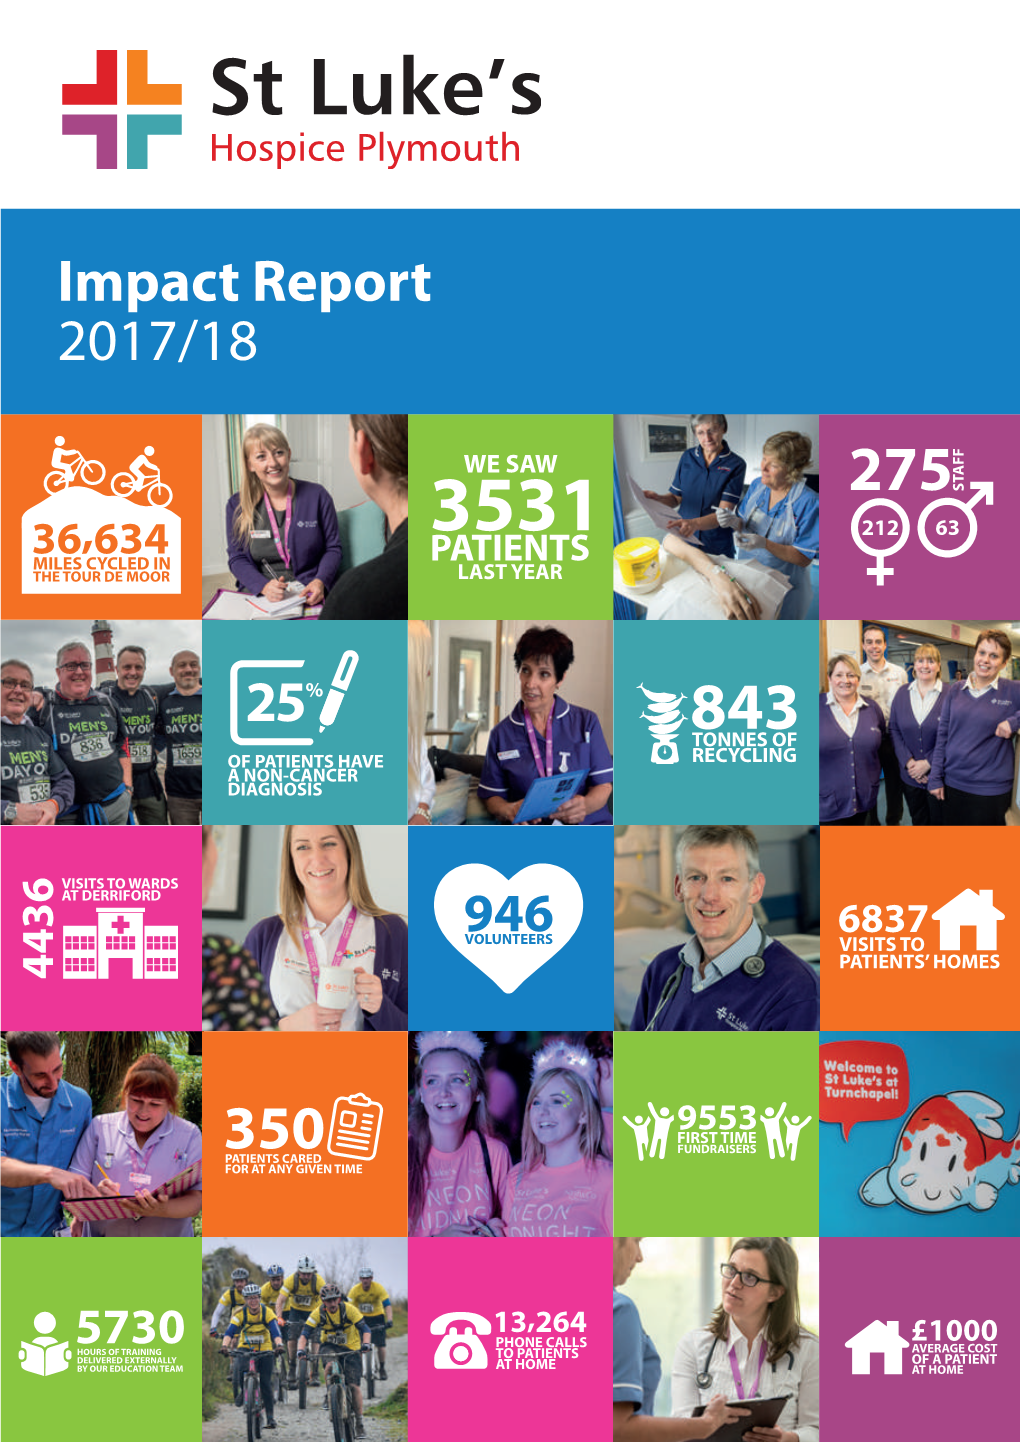 Impact Report 2017/18